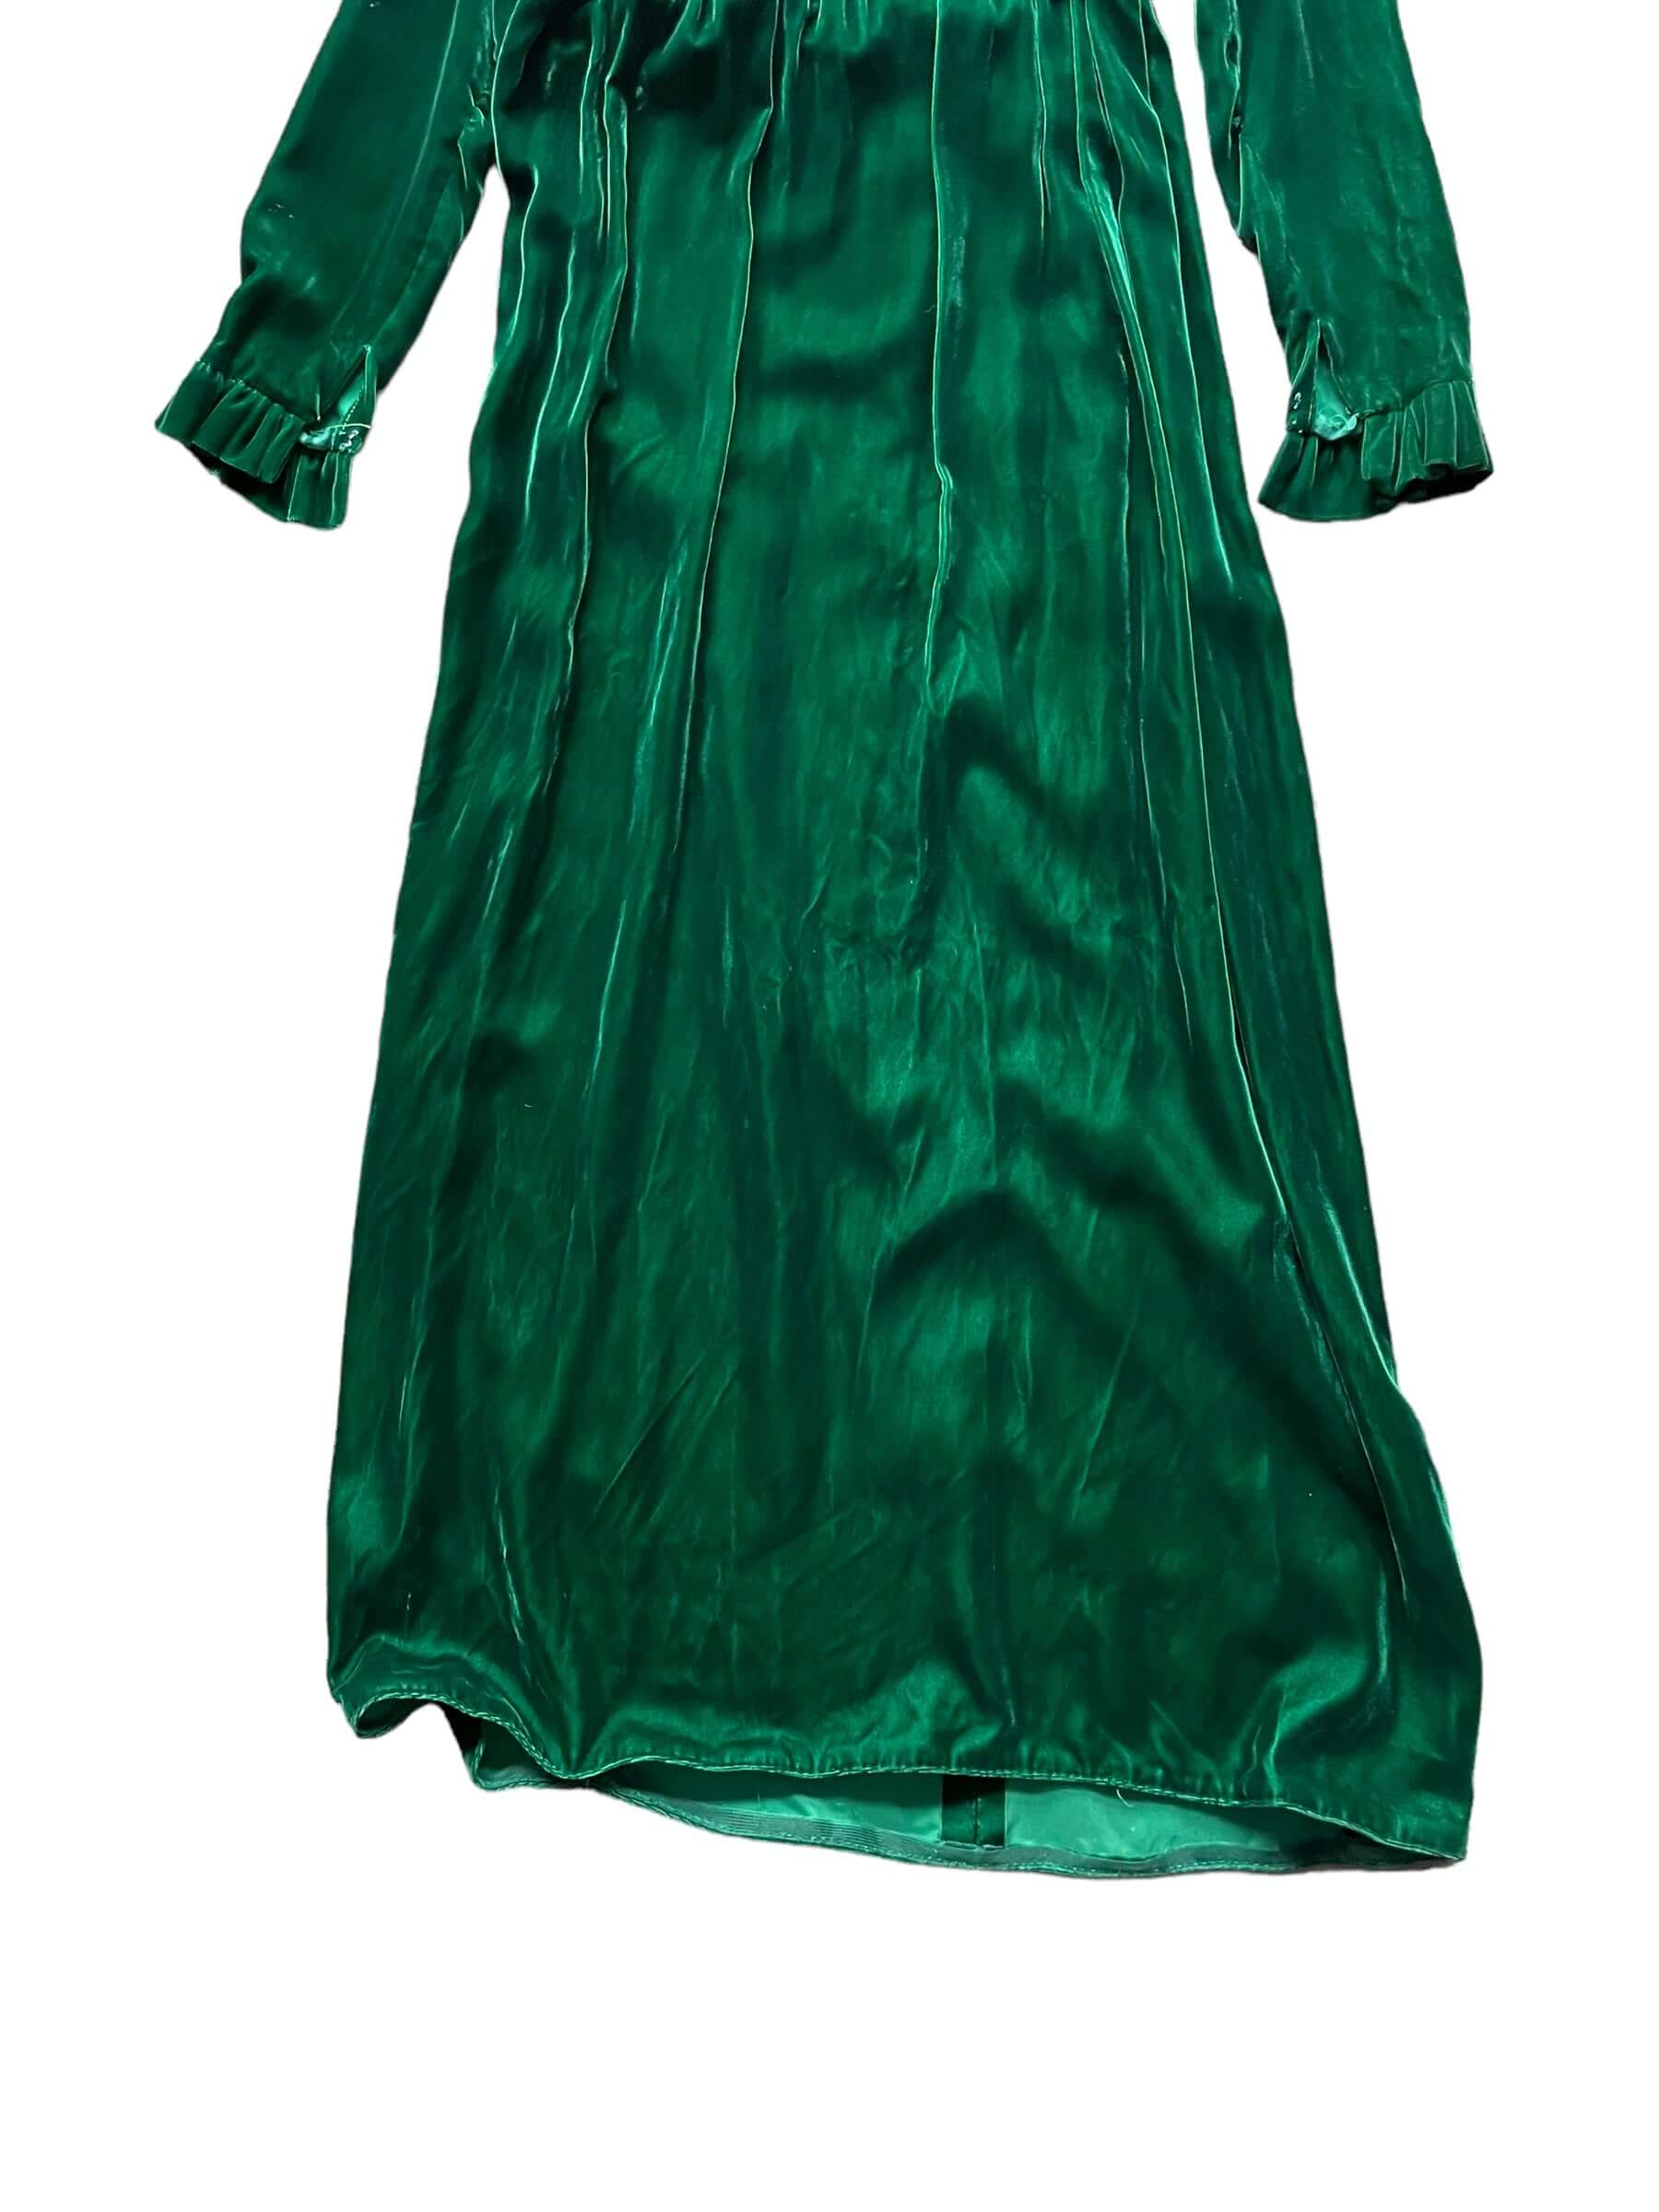 Front skirt view of Vintage 1960s Green Velvet Dress |  Barn Owl Vintage Dresses | Seattle Vintage Ladies Clothing